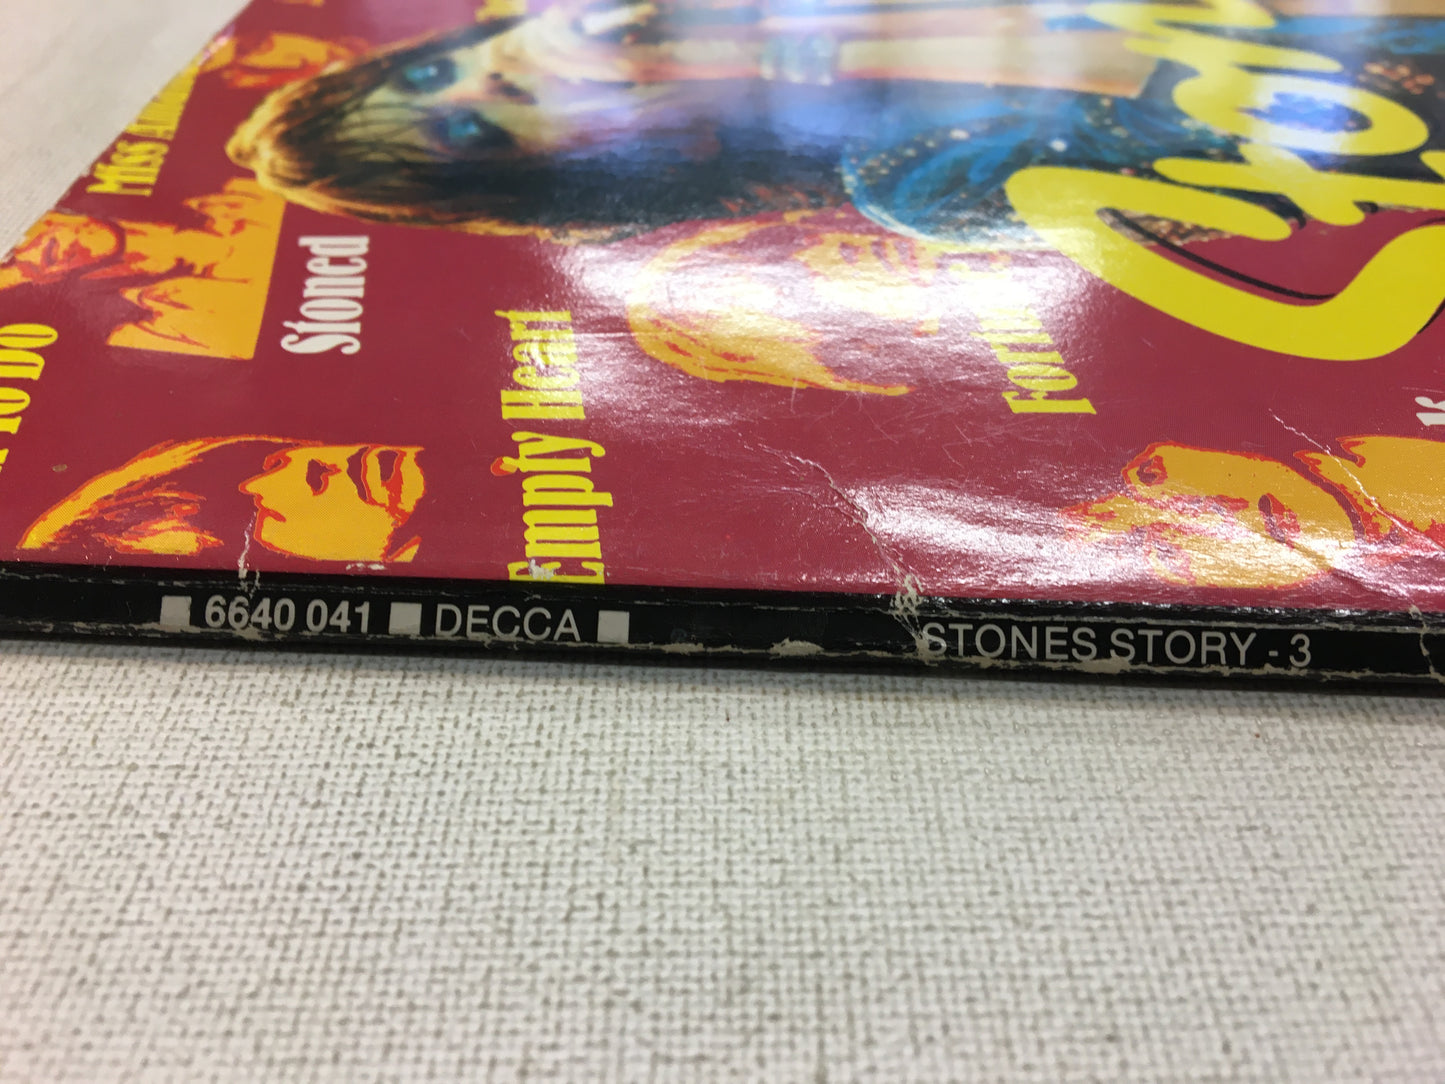 THE ROLLING STONES 2 LP ; STONES STORY 3